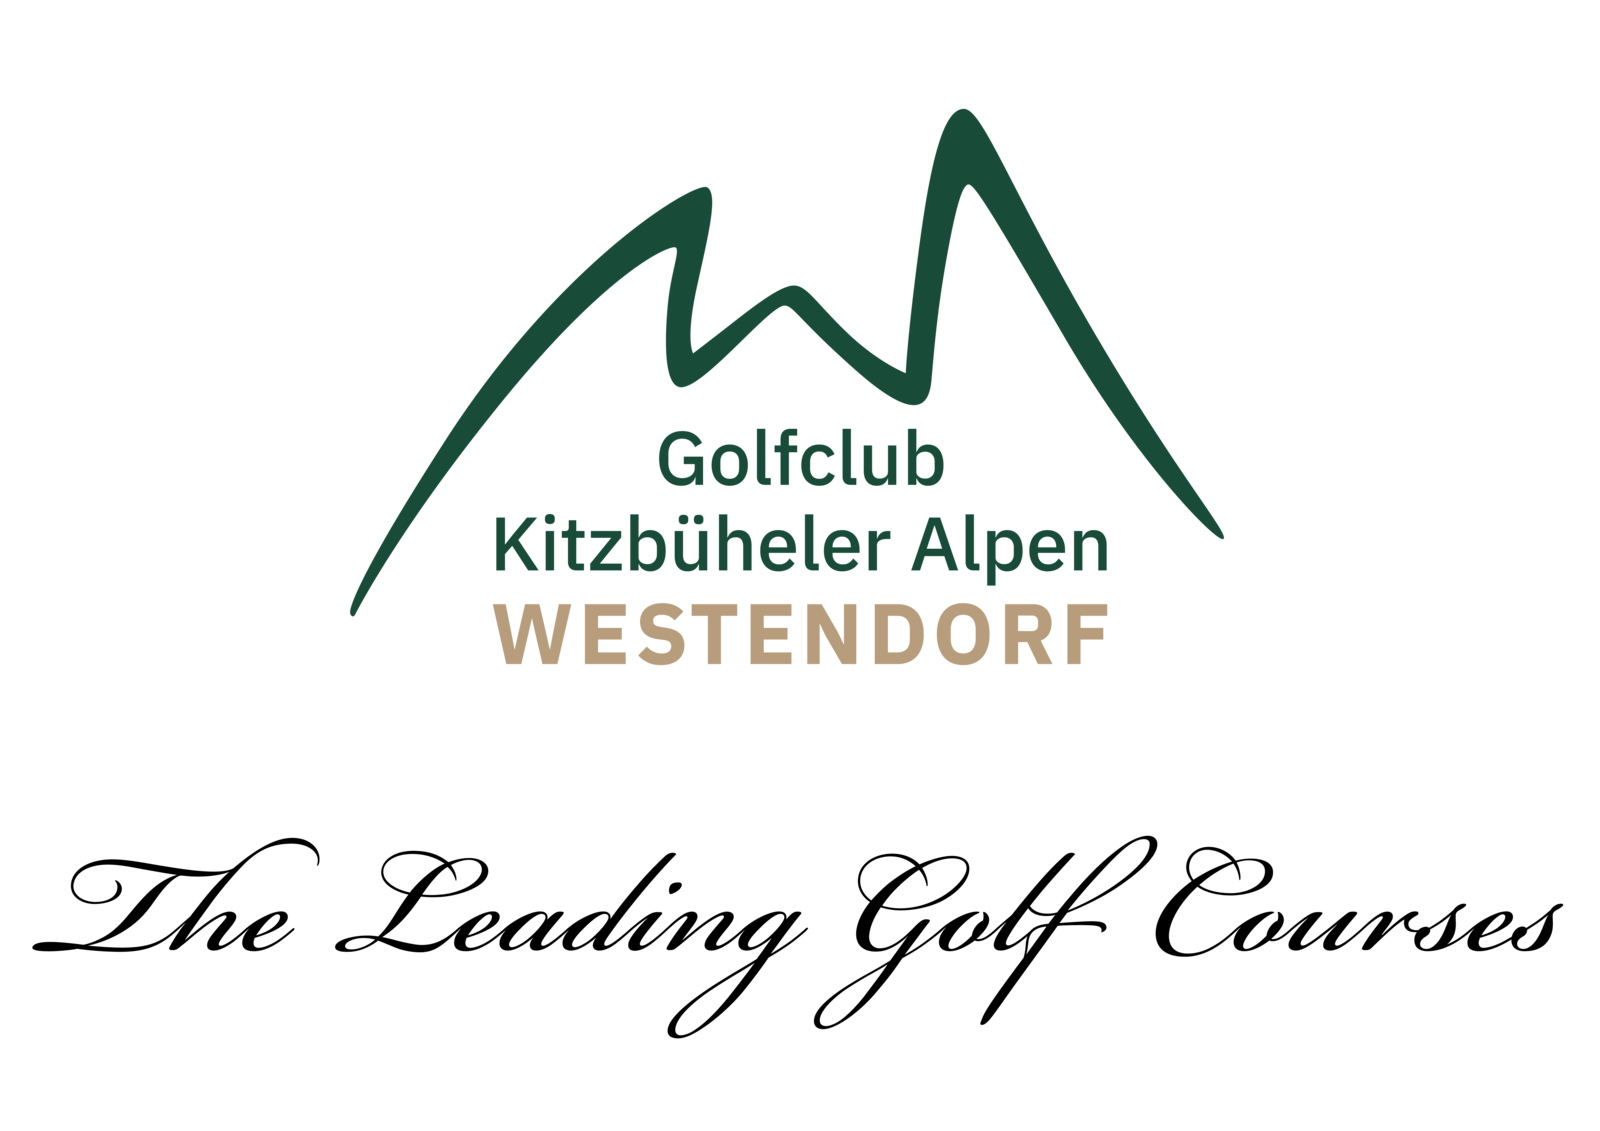 Golfclub Kitzbüheler Alpen